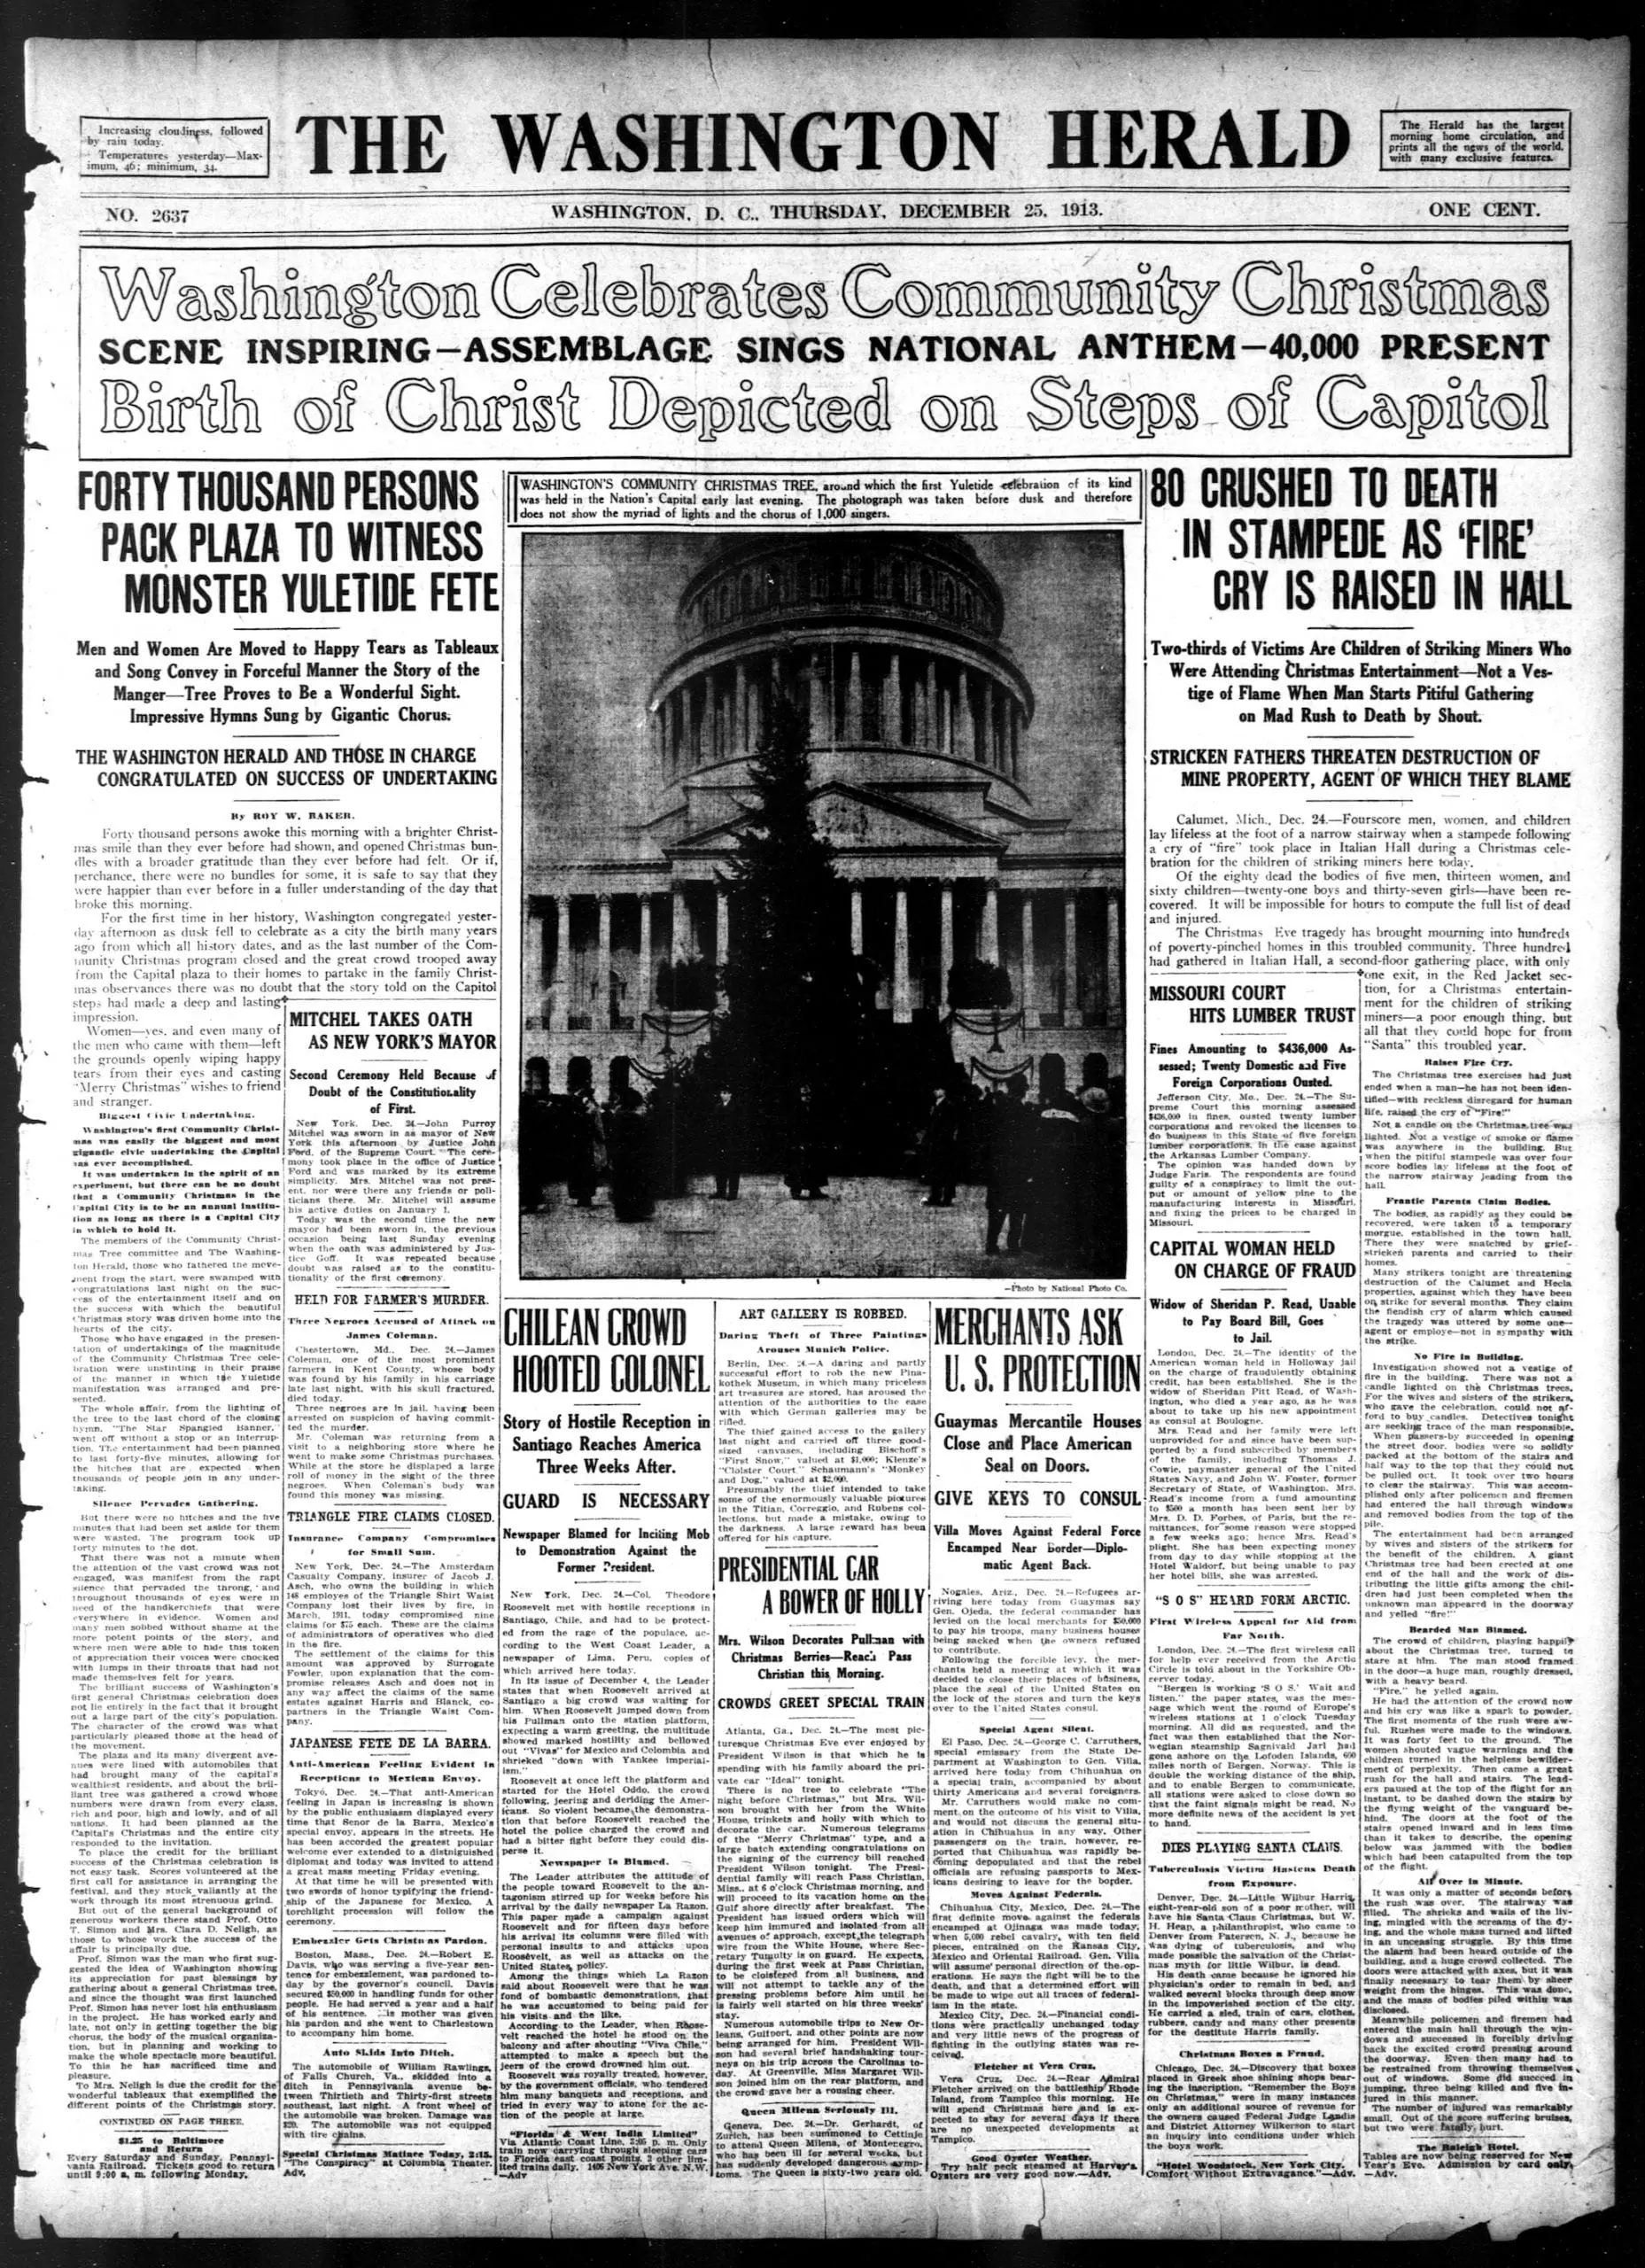 The Washington Herald - 12/25/1913